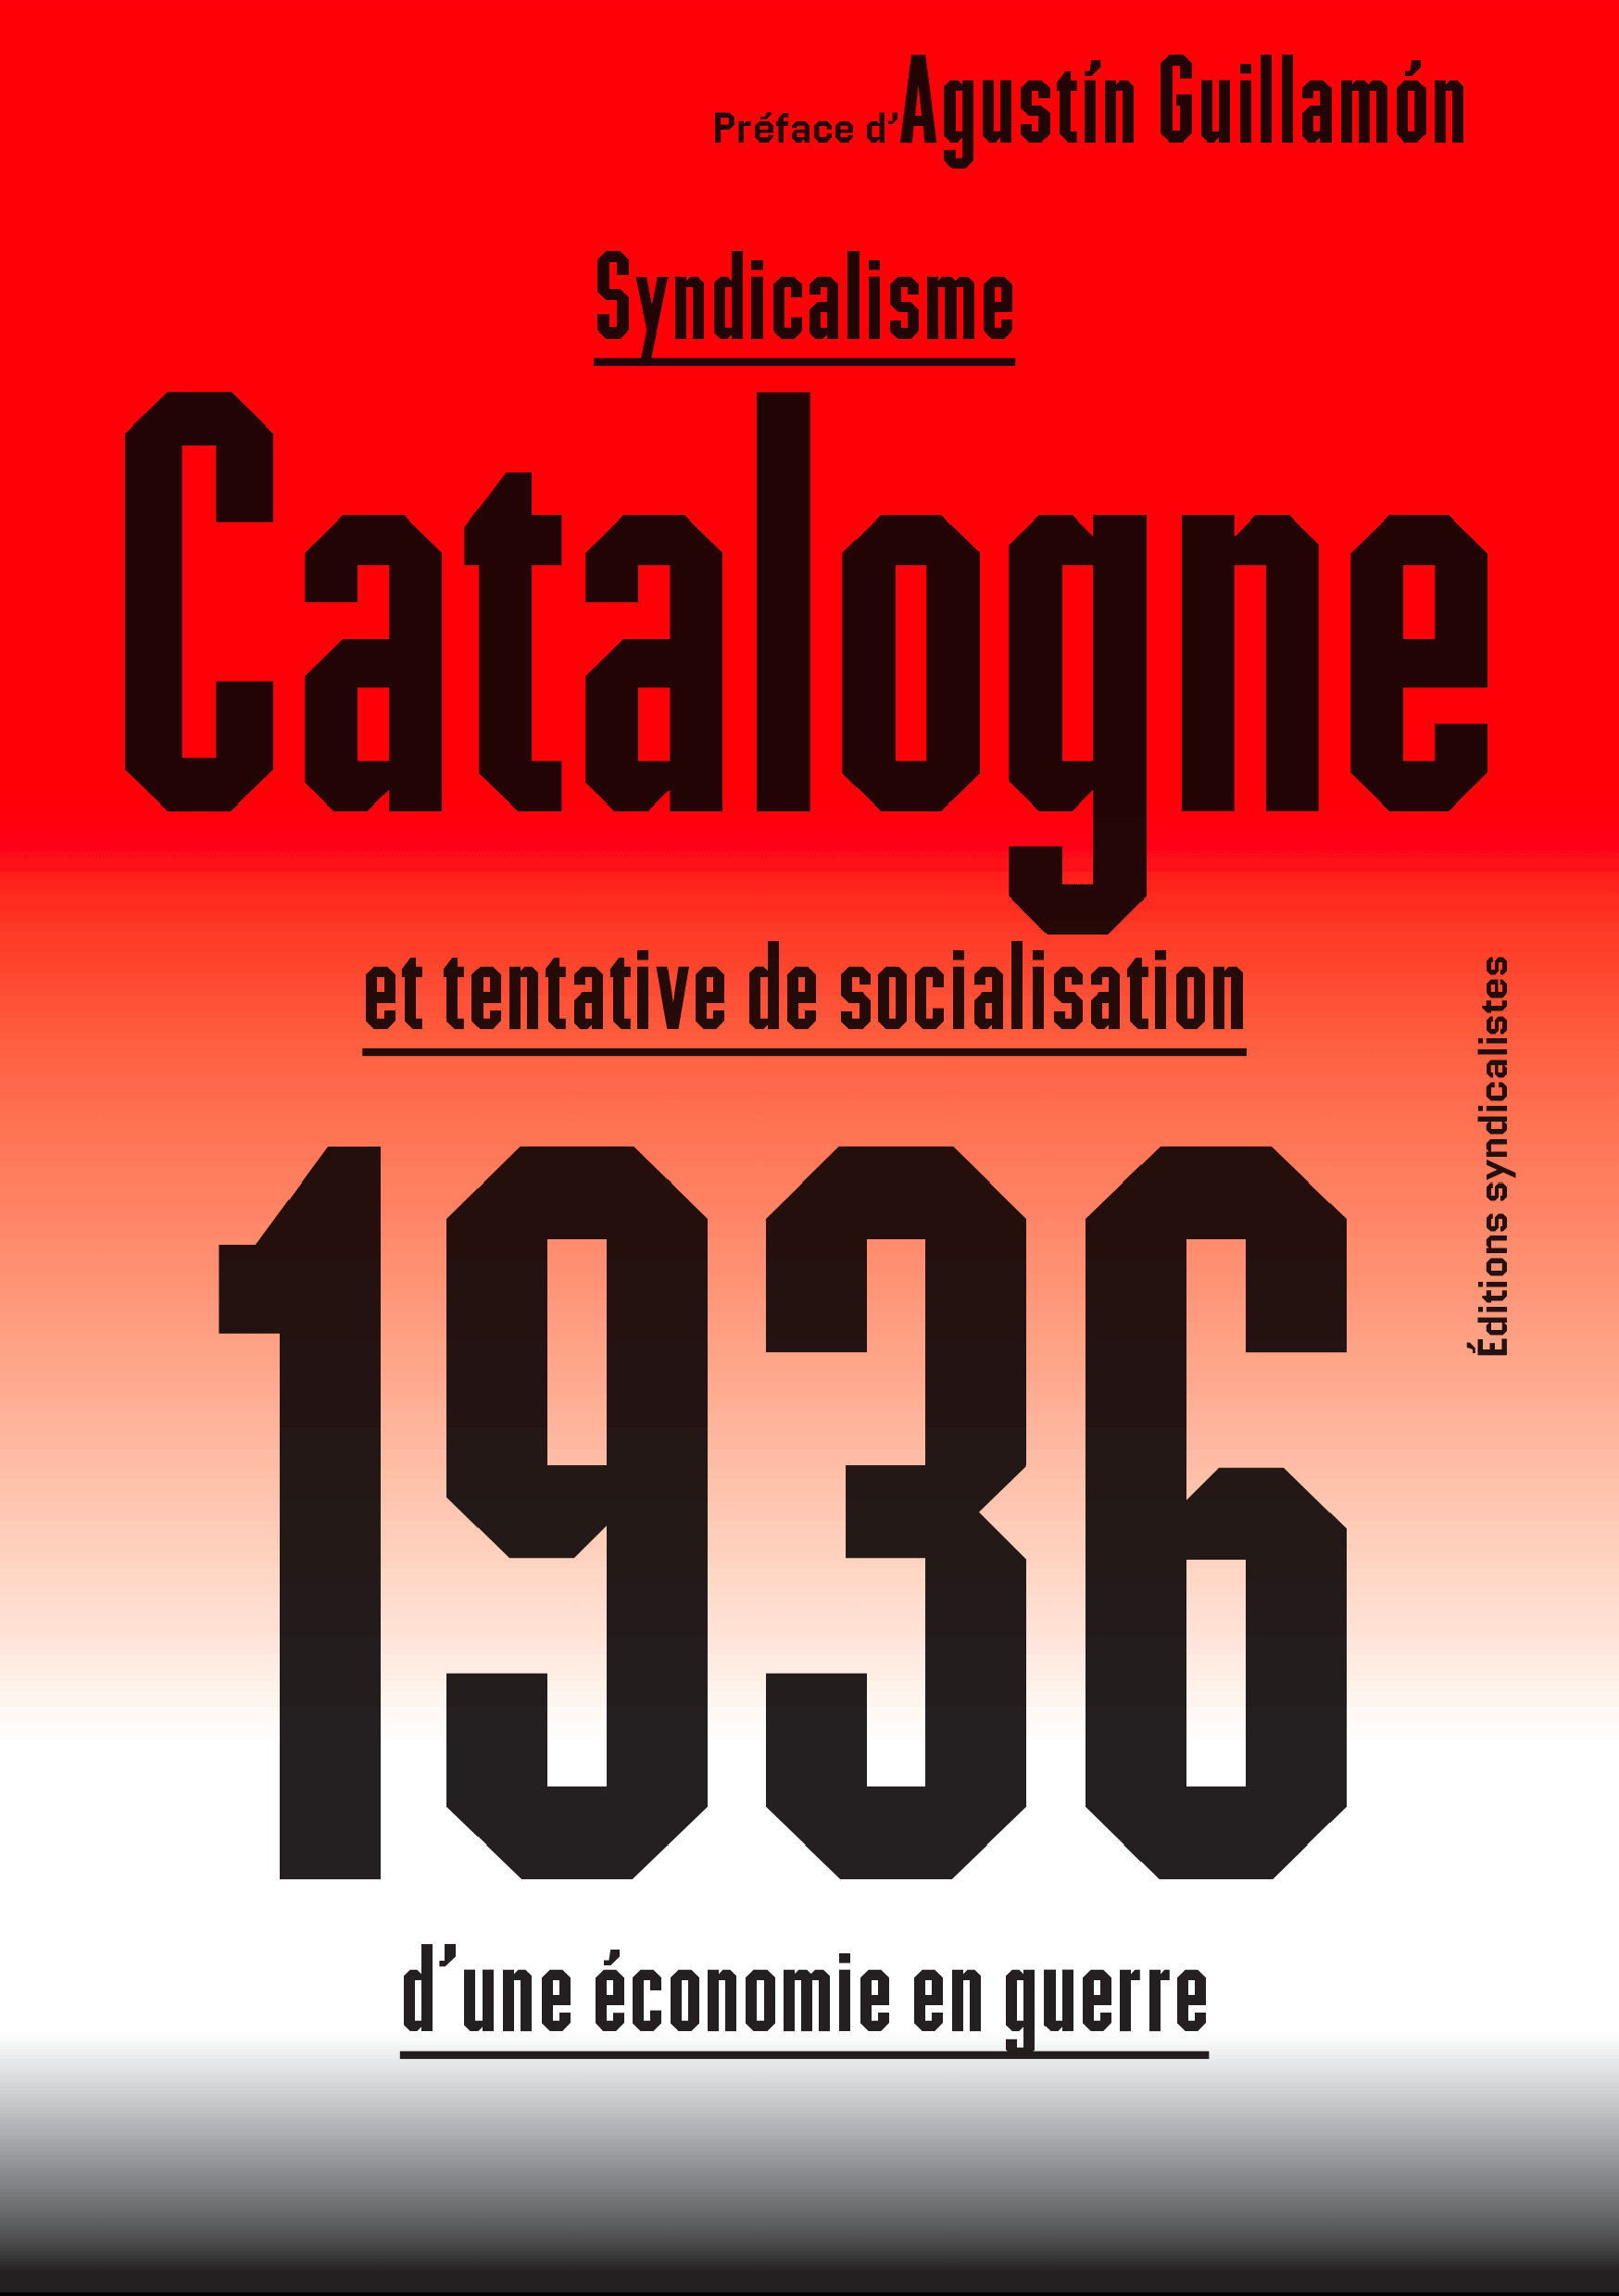 Catalogne 1936